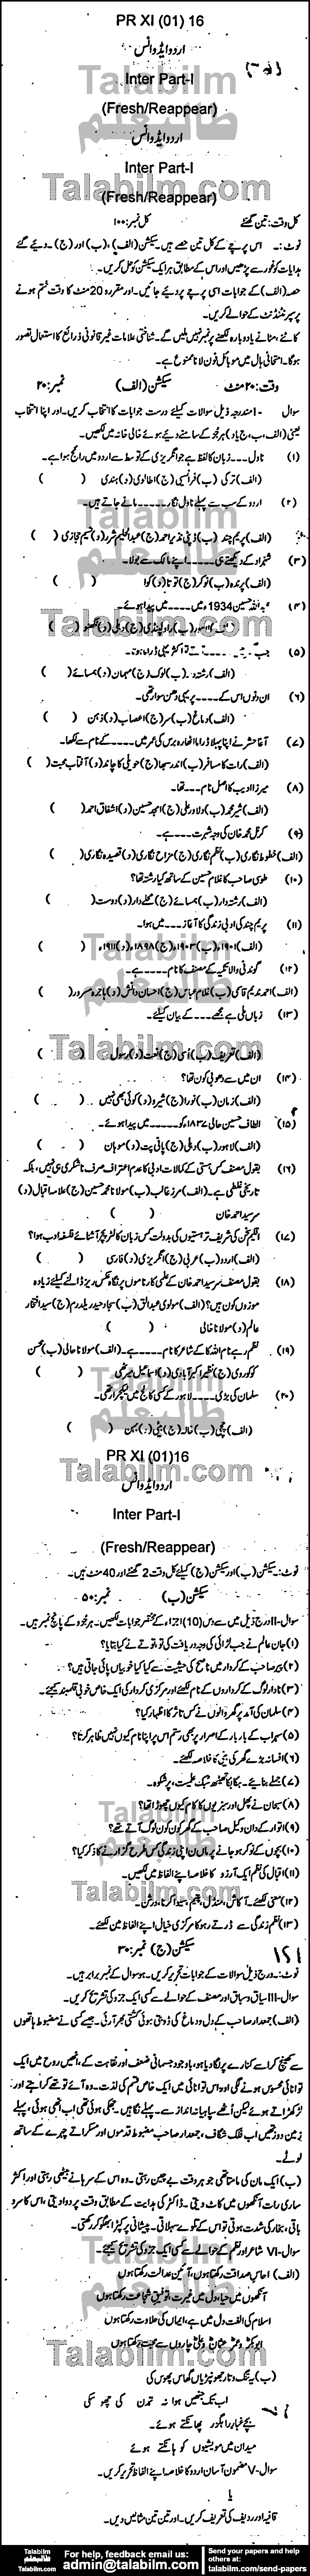 Urdu 0 past paper for Group-I 2016